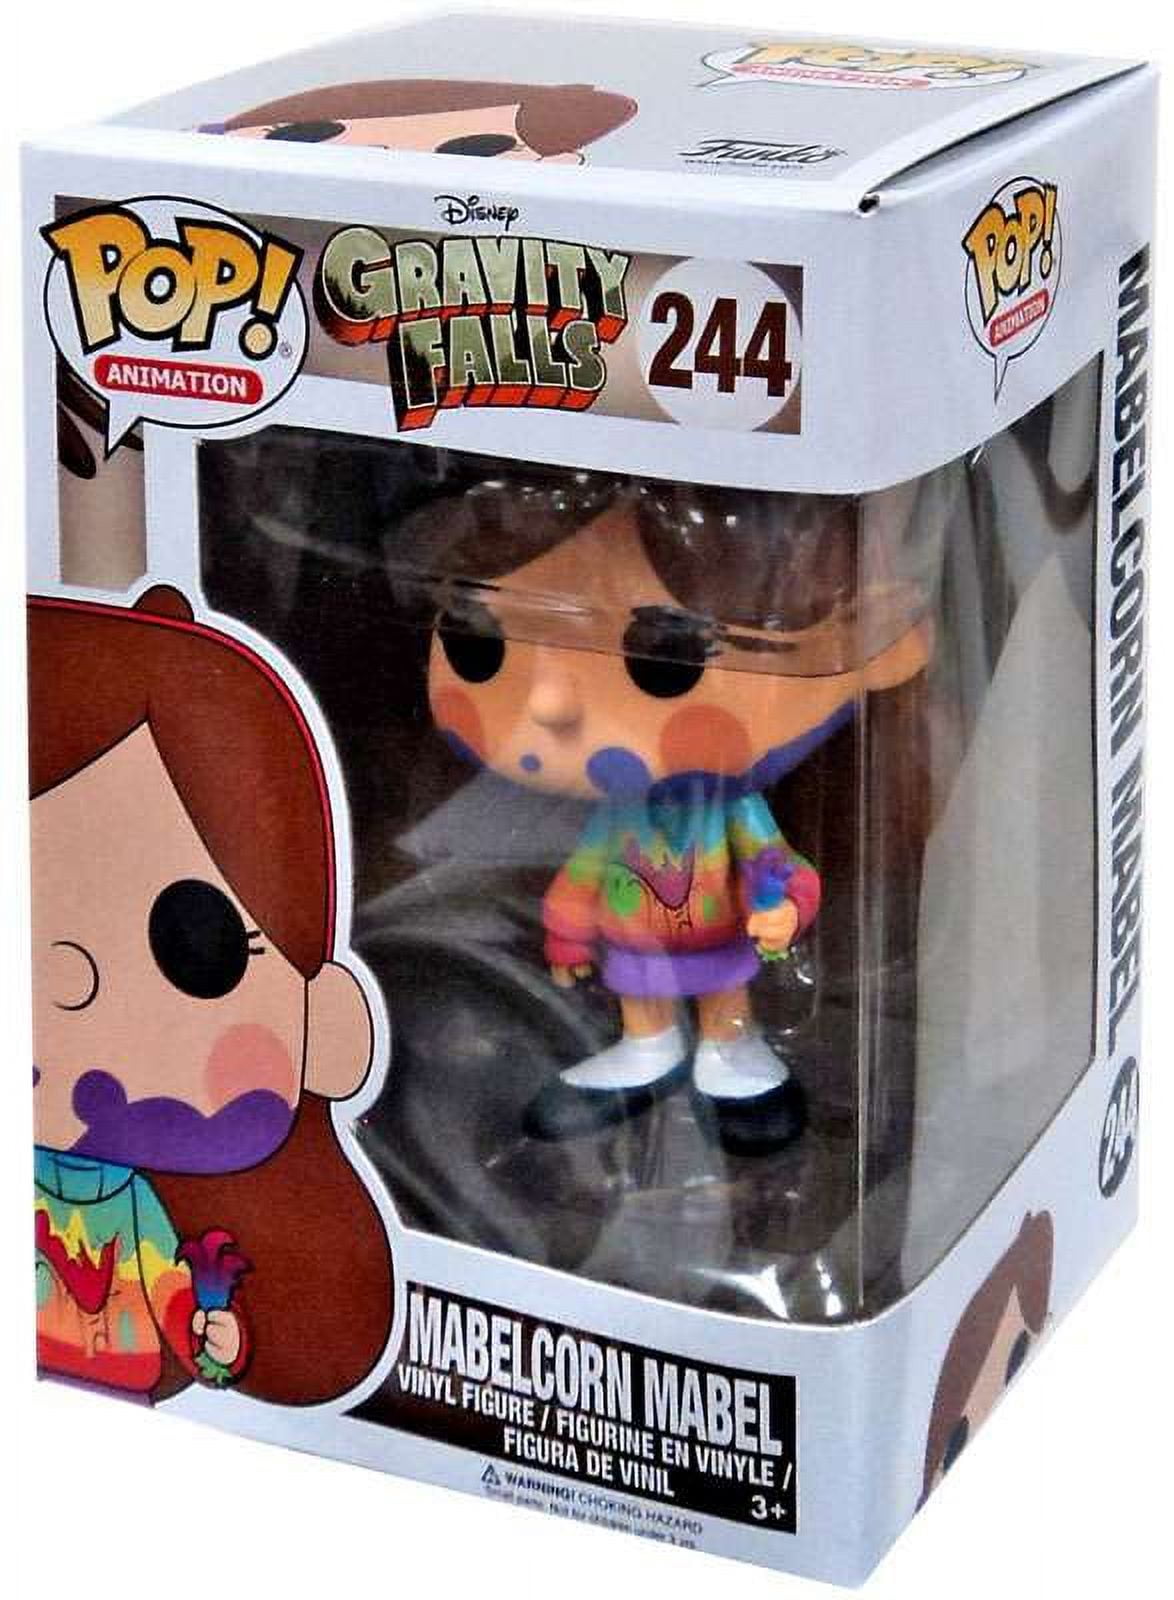 Gravity Falls Funko Pop! Vinyls, Gravity Falls Wiki